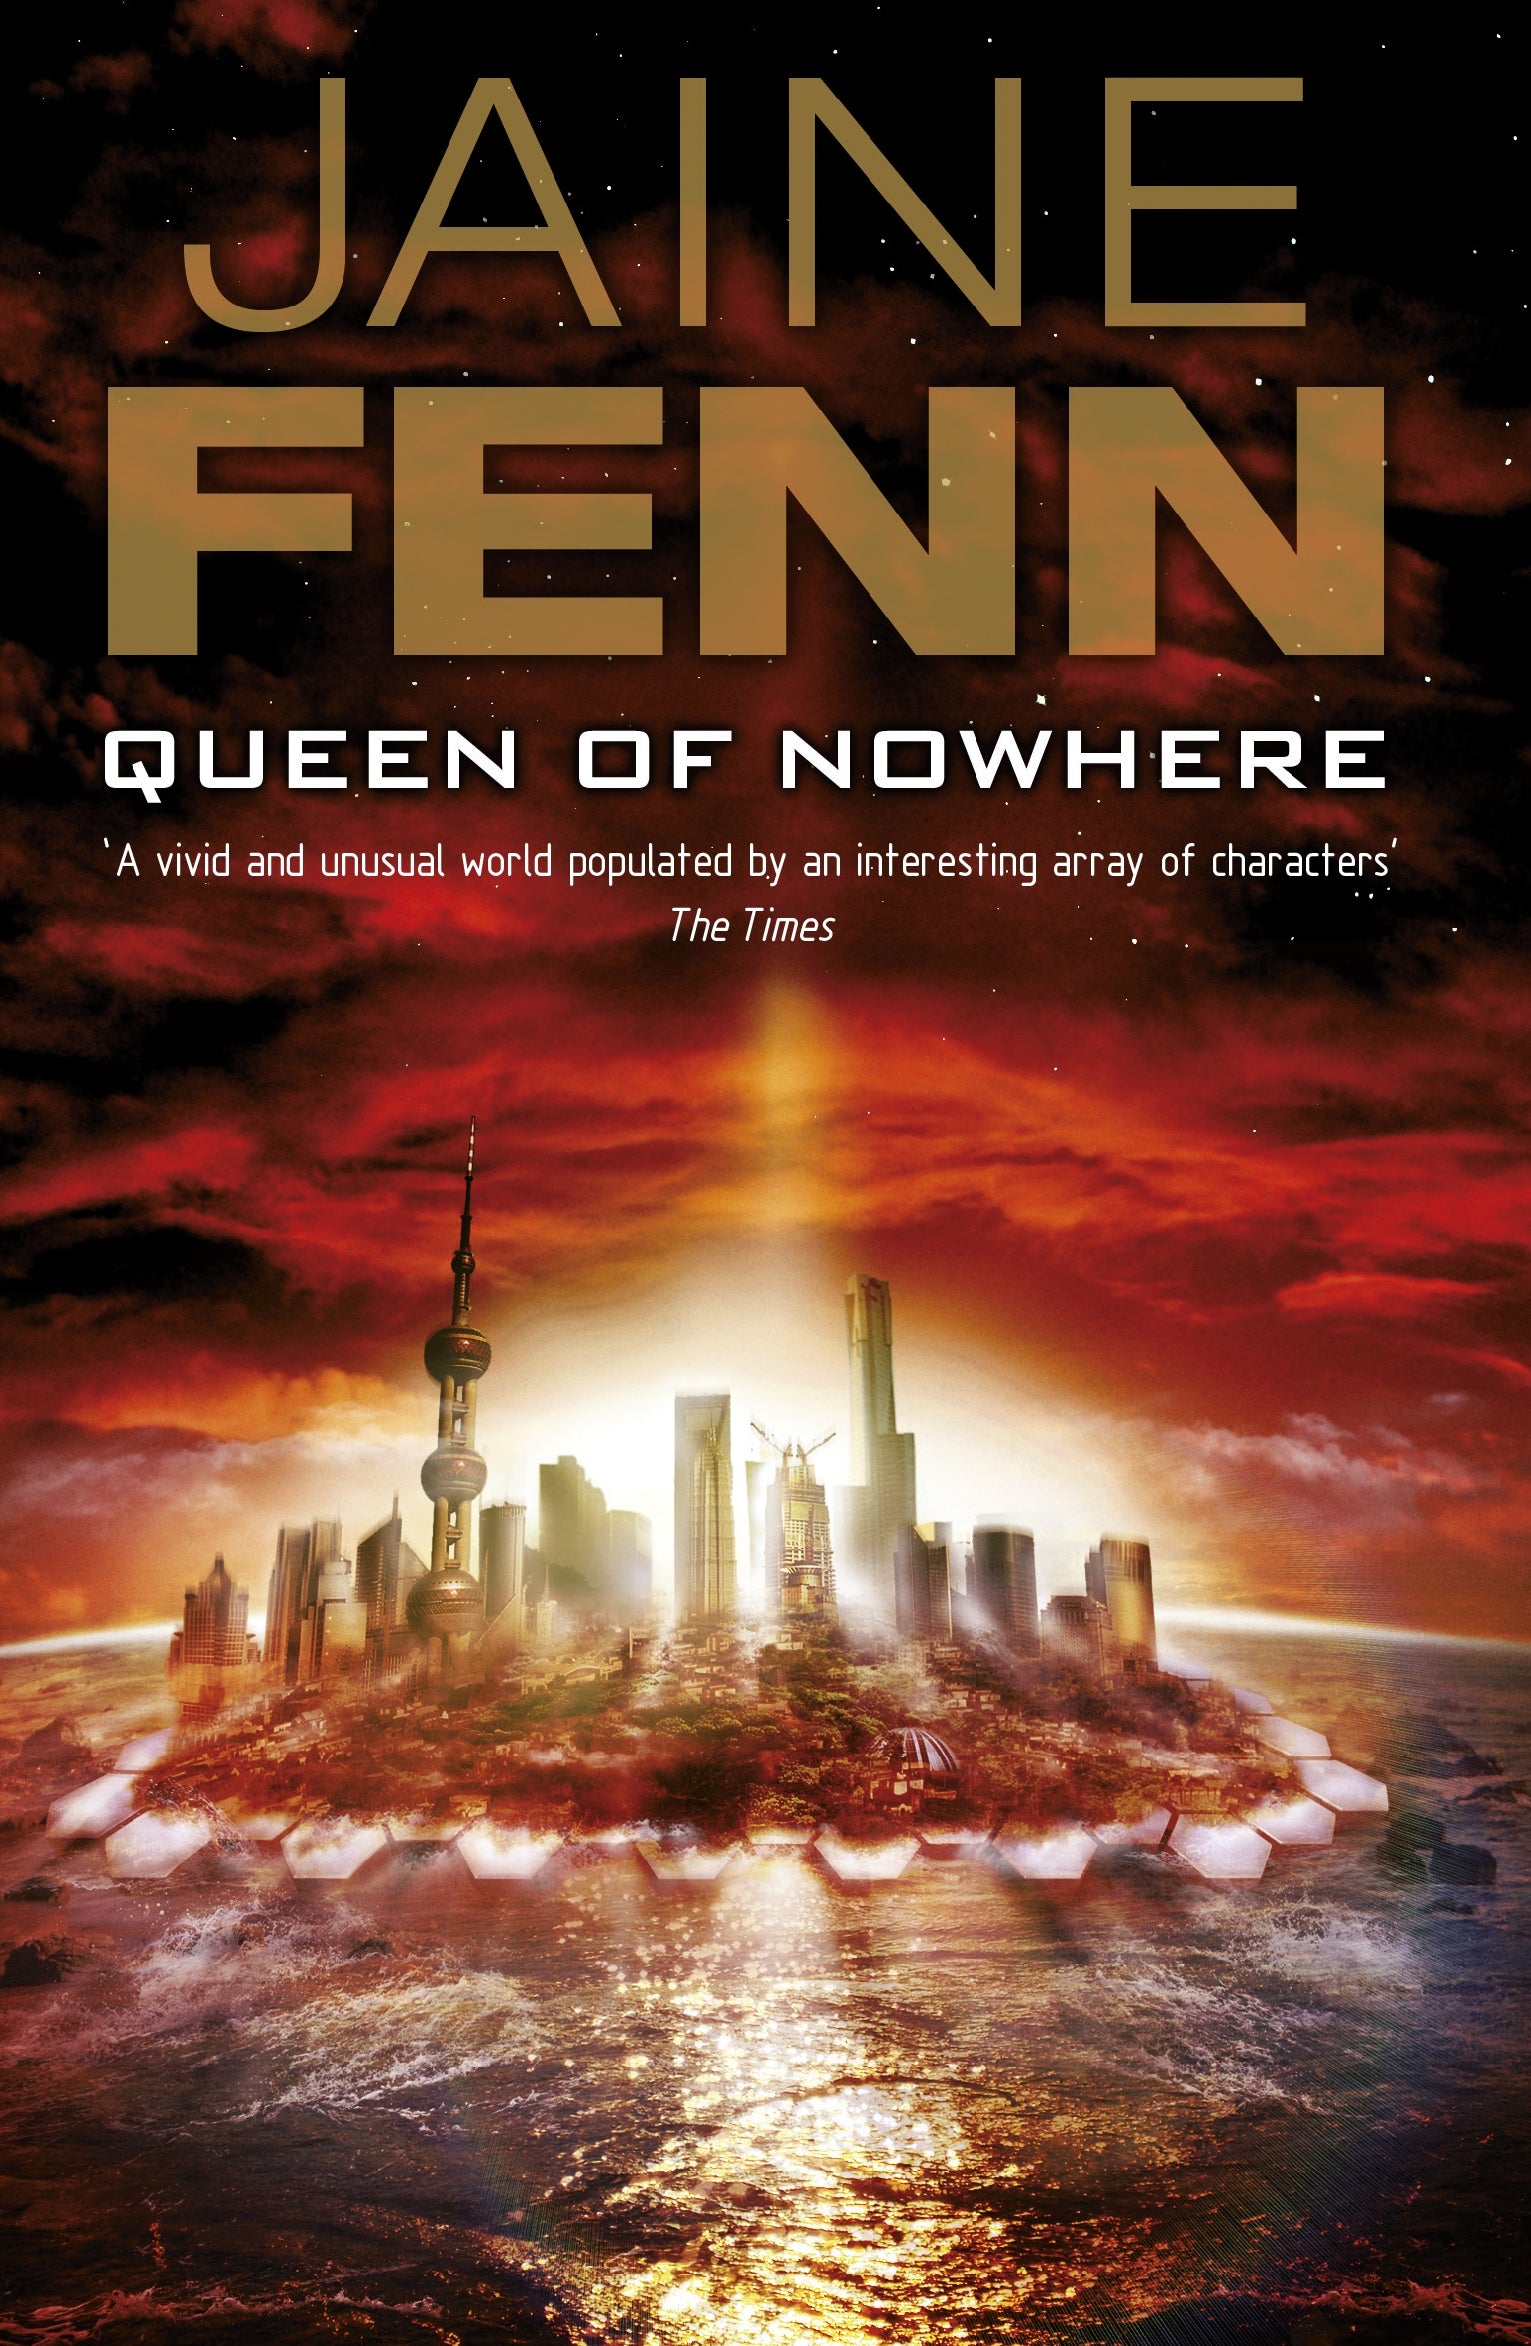 Queen of Nowhere by Jaine Fenn